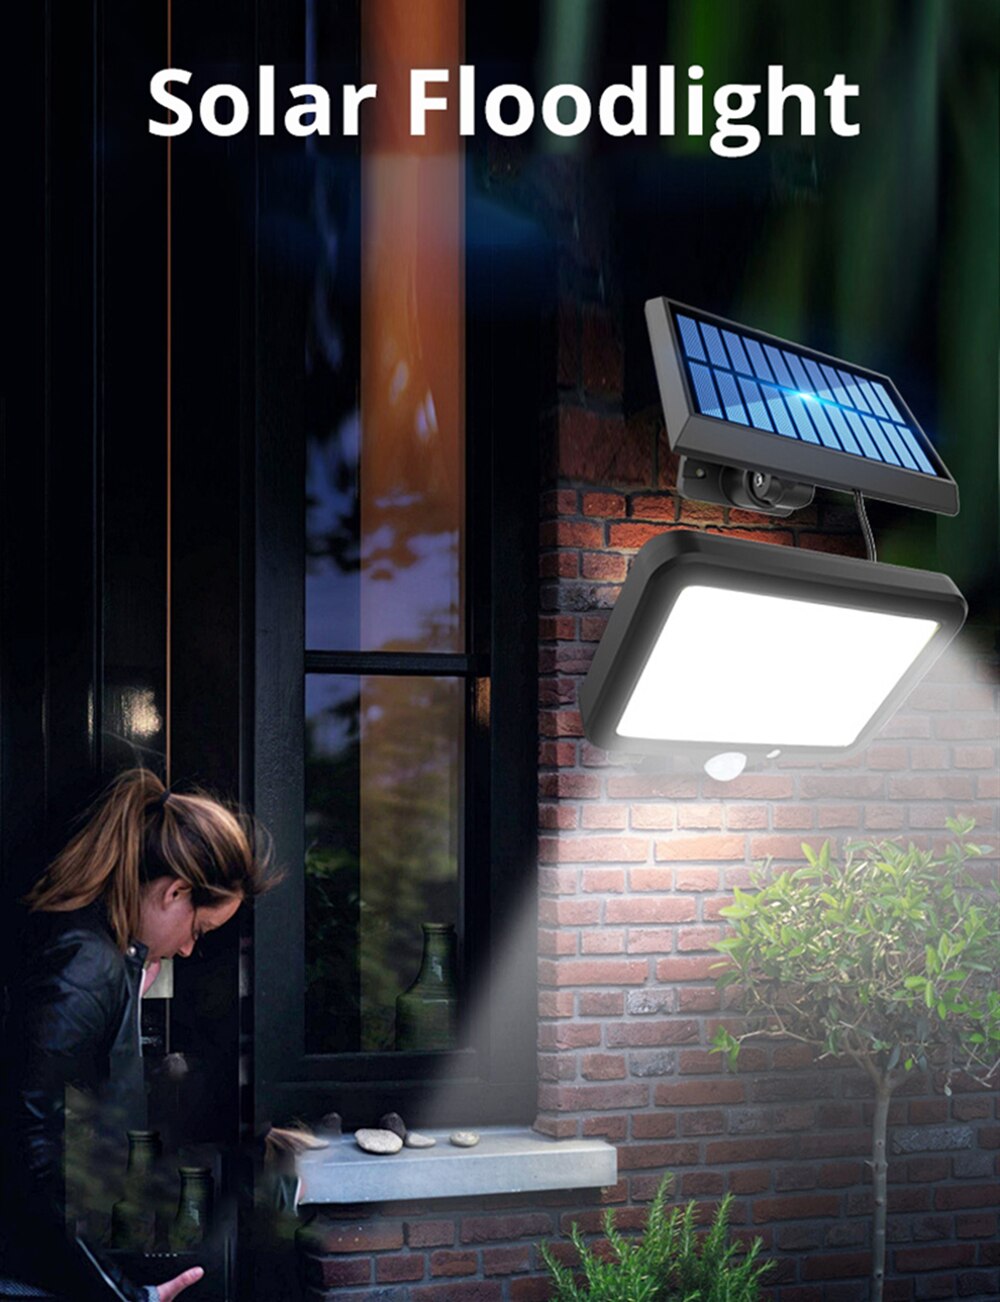 LED Solar Light Outdoor Motion Sensor Wall Lamp Remote Control Waterproof Home Emergency Yard Garden Decoration Street Lights